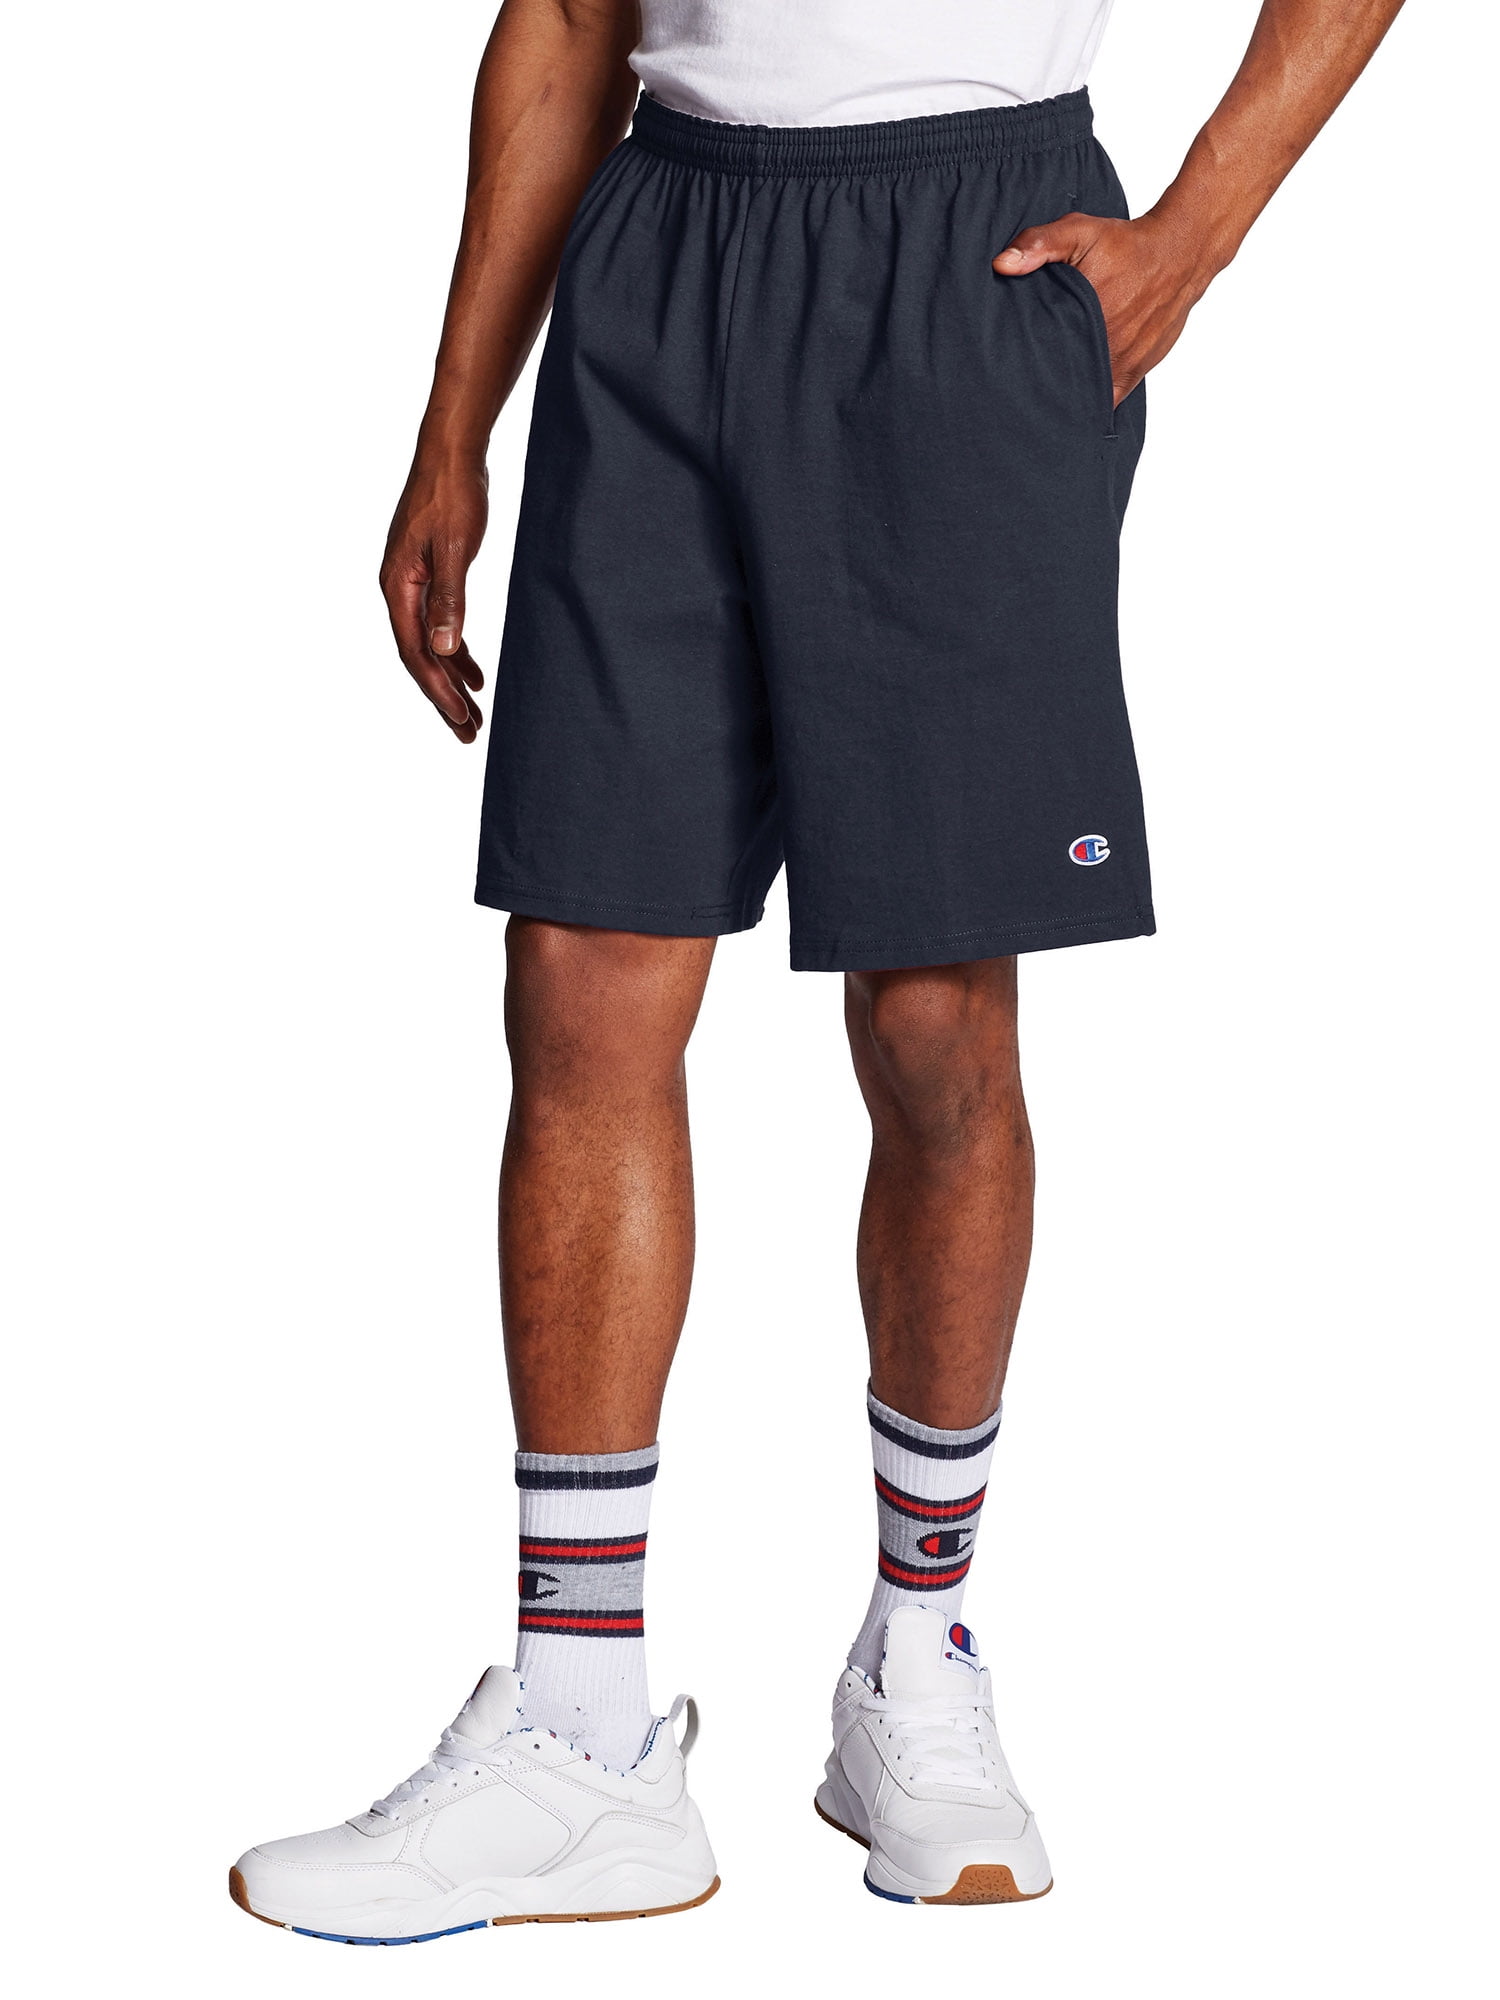 Champion Men's Authentic Cotton 9" Shorts with Pockets, up Size 4XL - Walmart.com